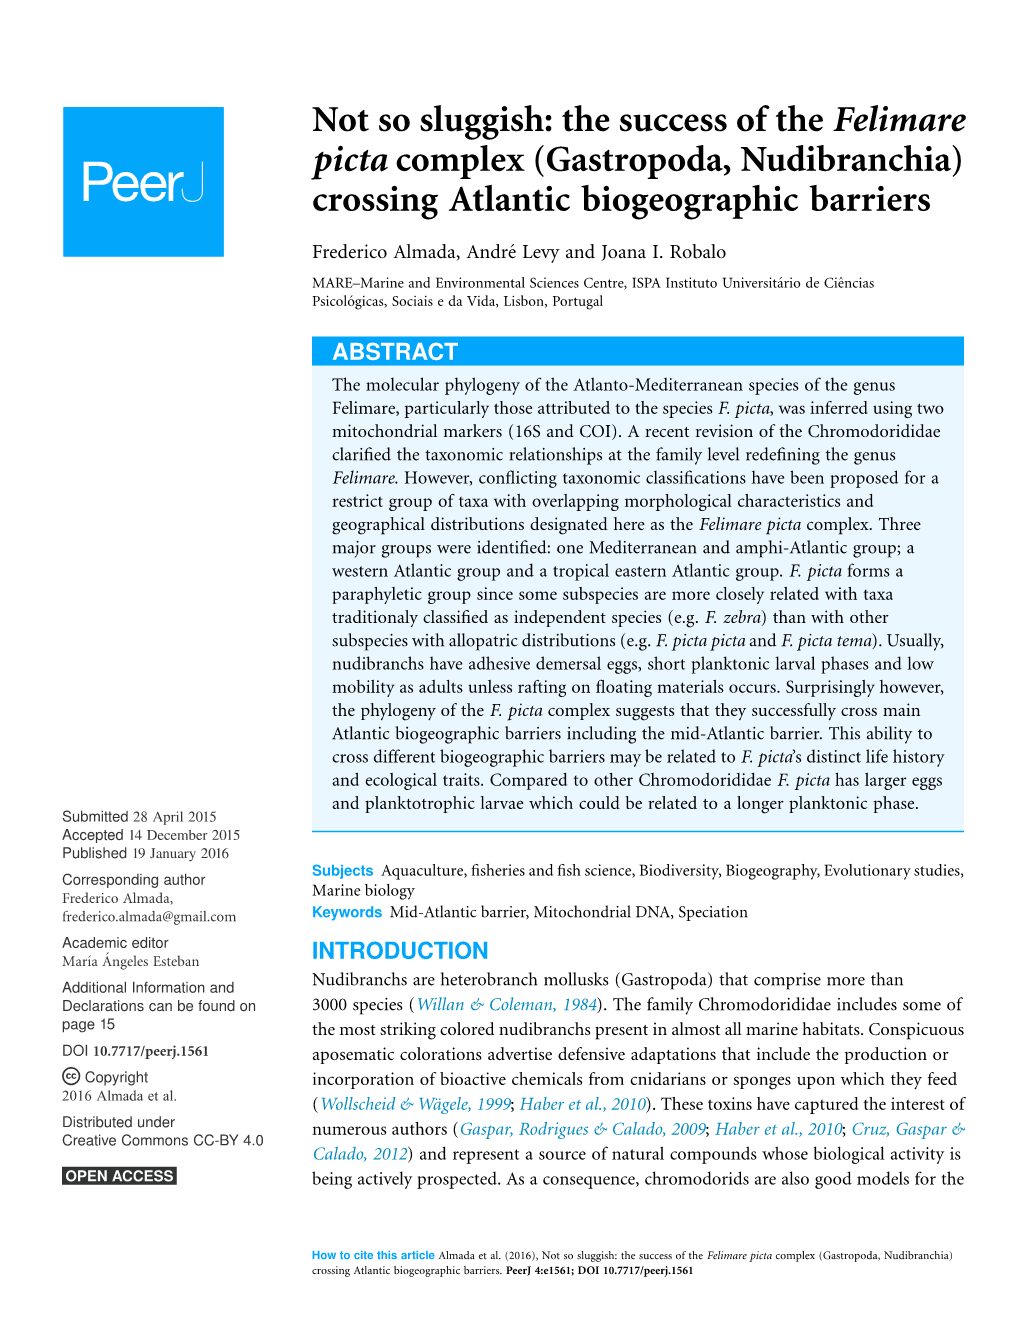 Not So Sluggish: the Success of the Felimare Picta Complex (Gastropoda, Nudibranchia) Crossing Atlantic Biogeographic Barriers